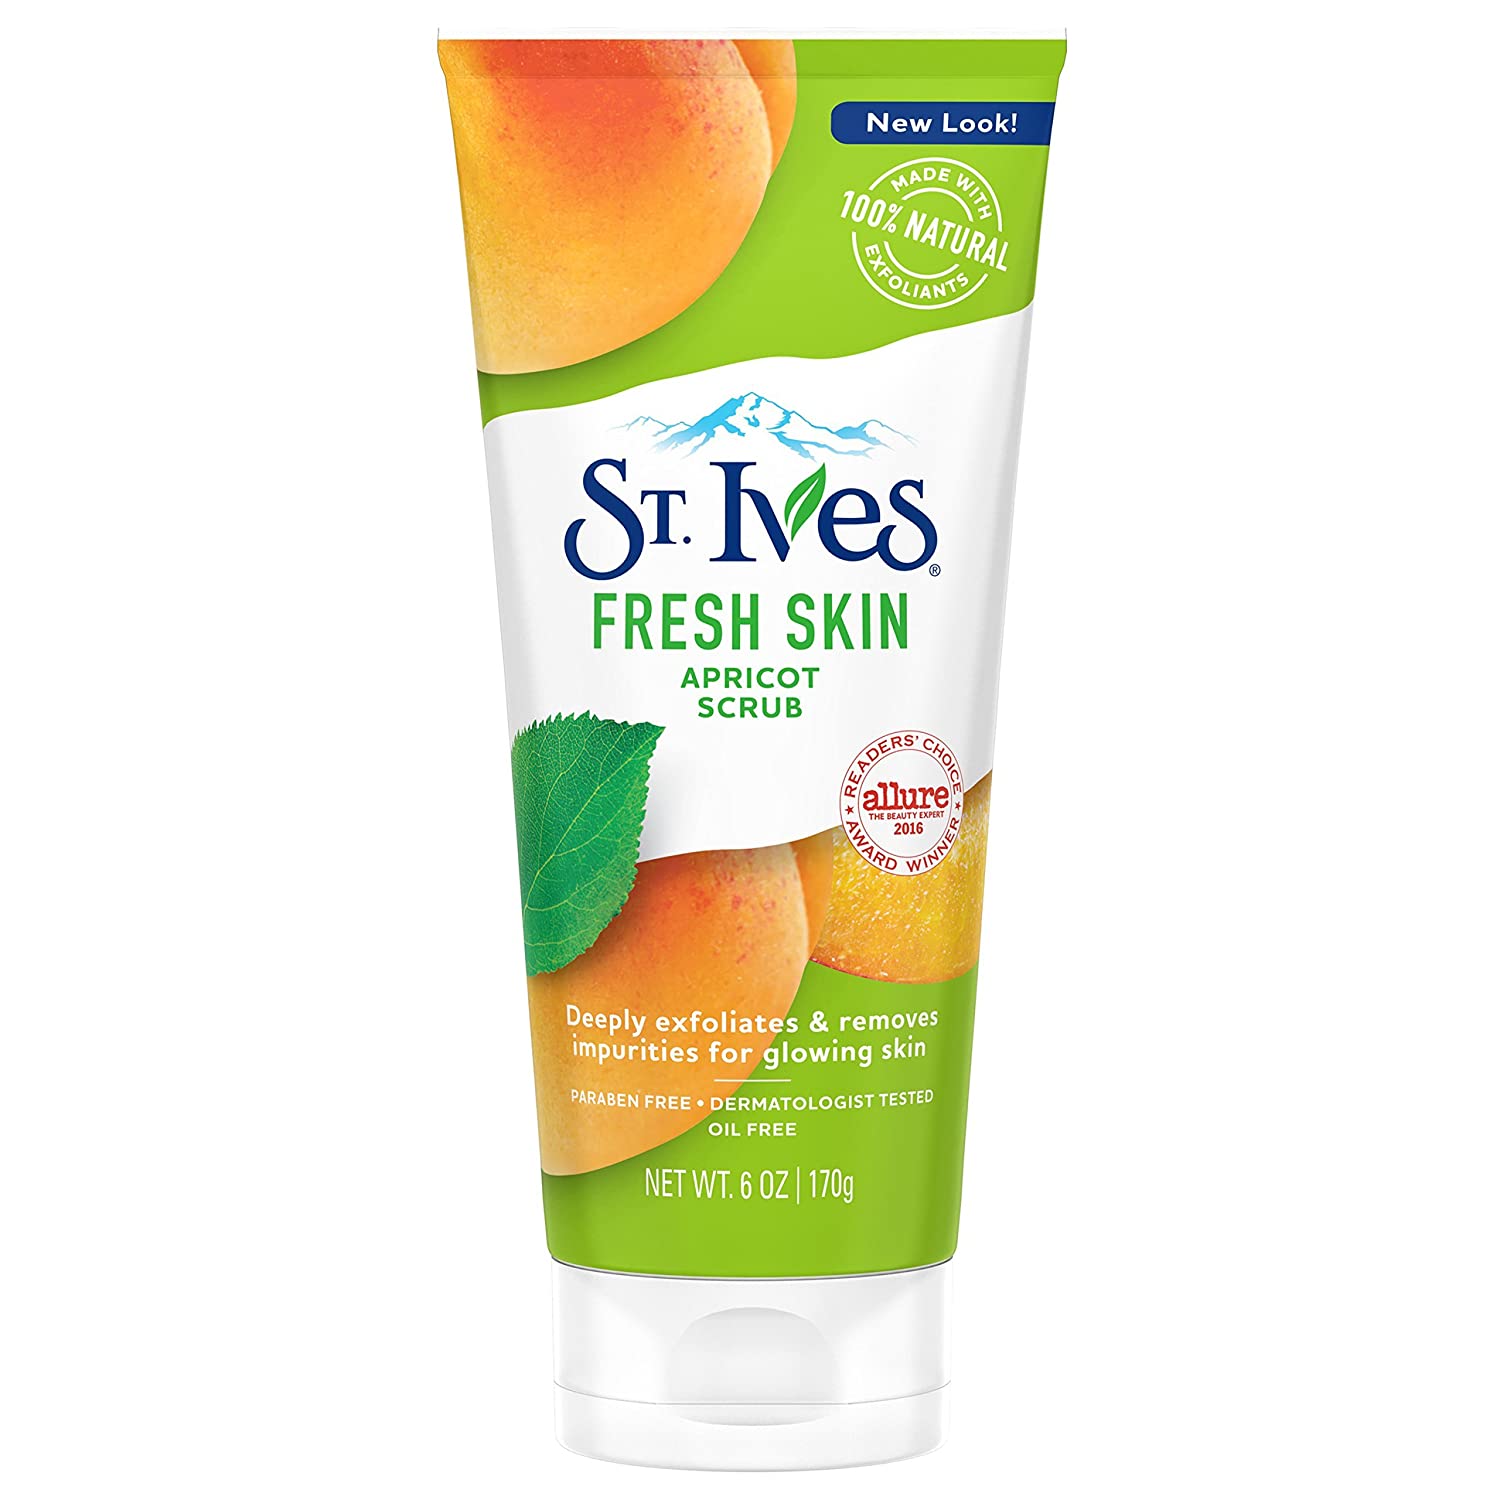 St.ives Fresh Skin Apricot Scrub